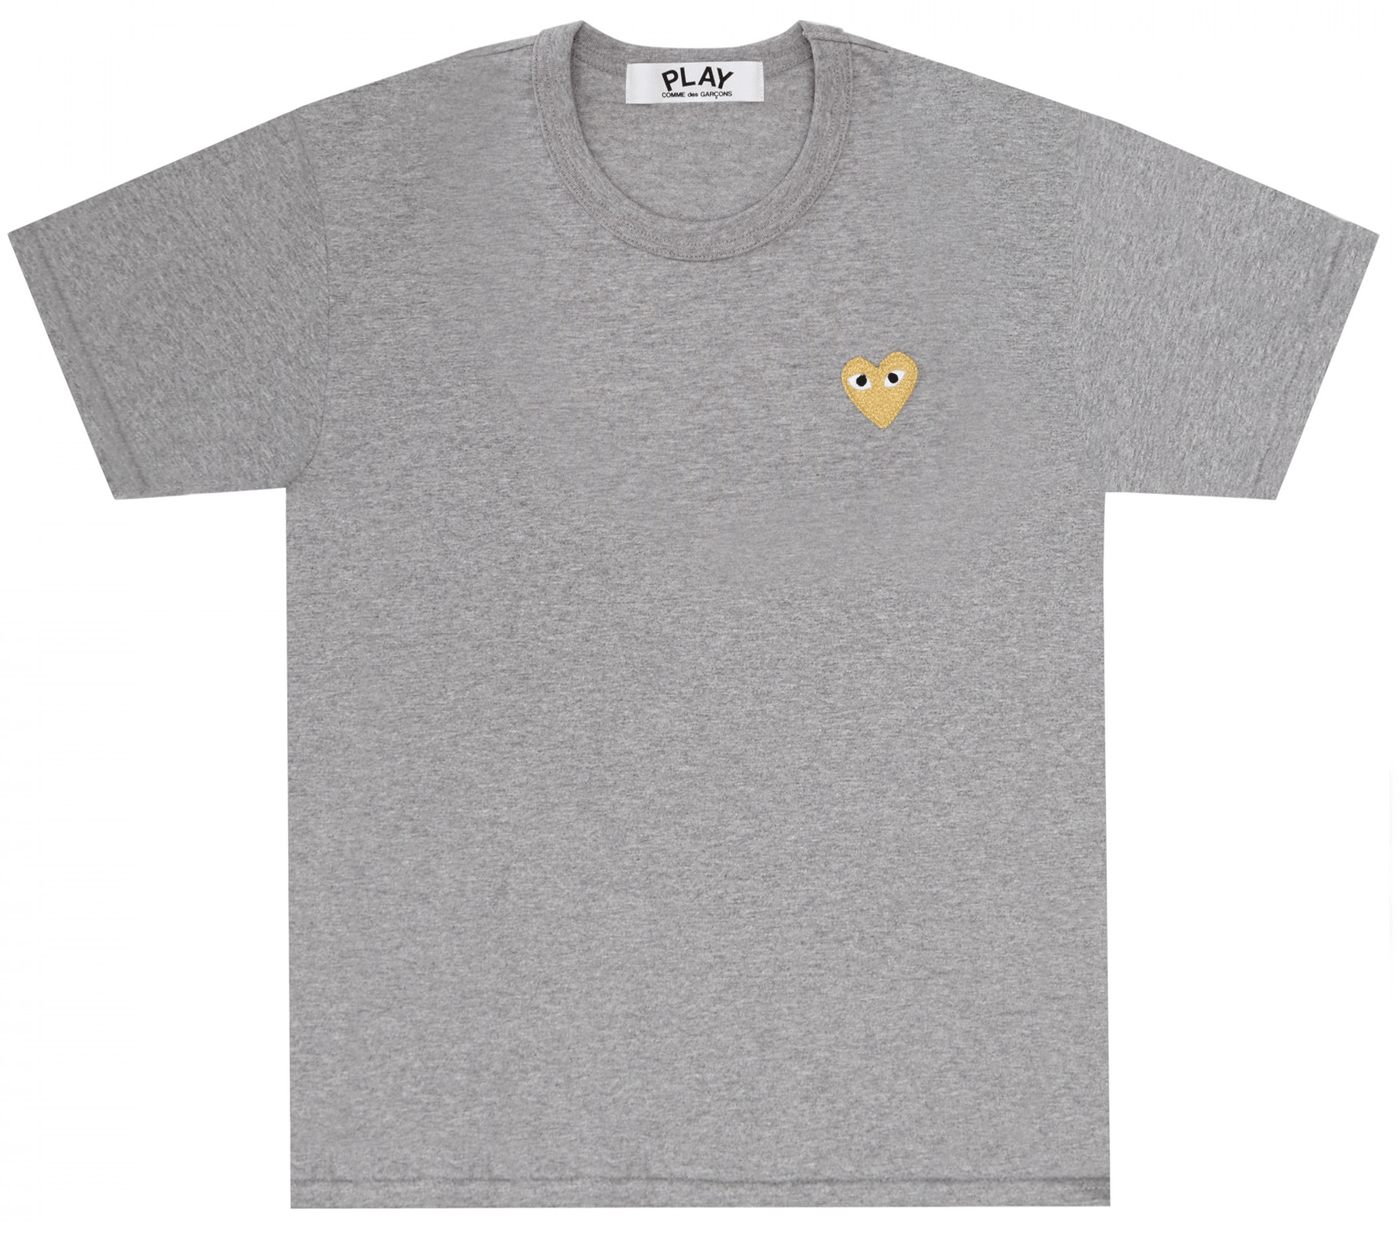 Comme-des-Garcons-Play-T-Shirt-With-Gold-Emblem-Women-Grey-1